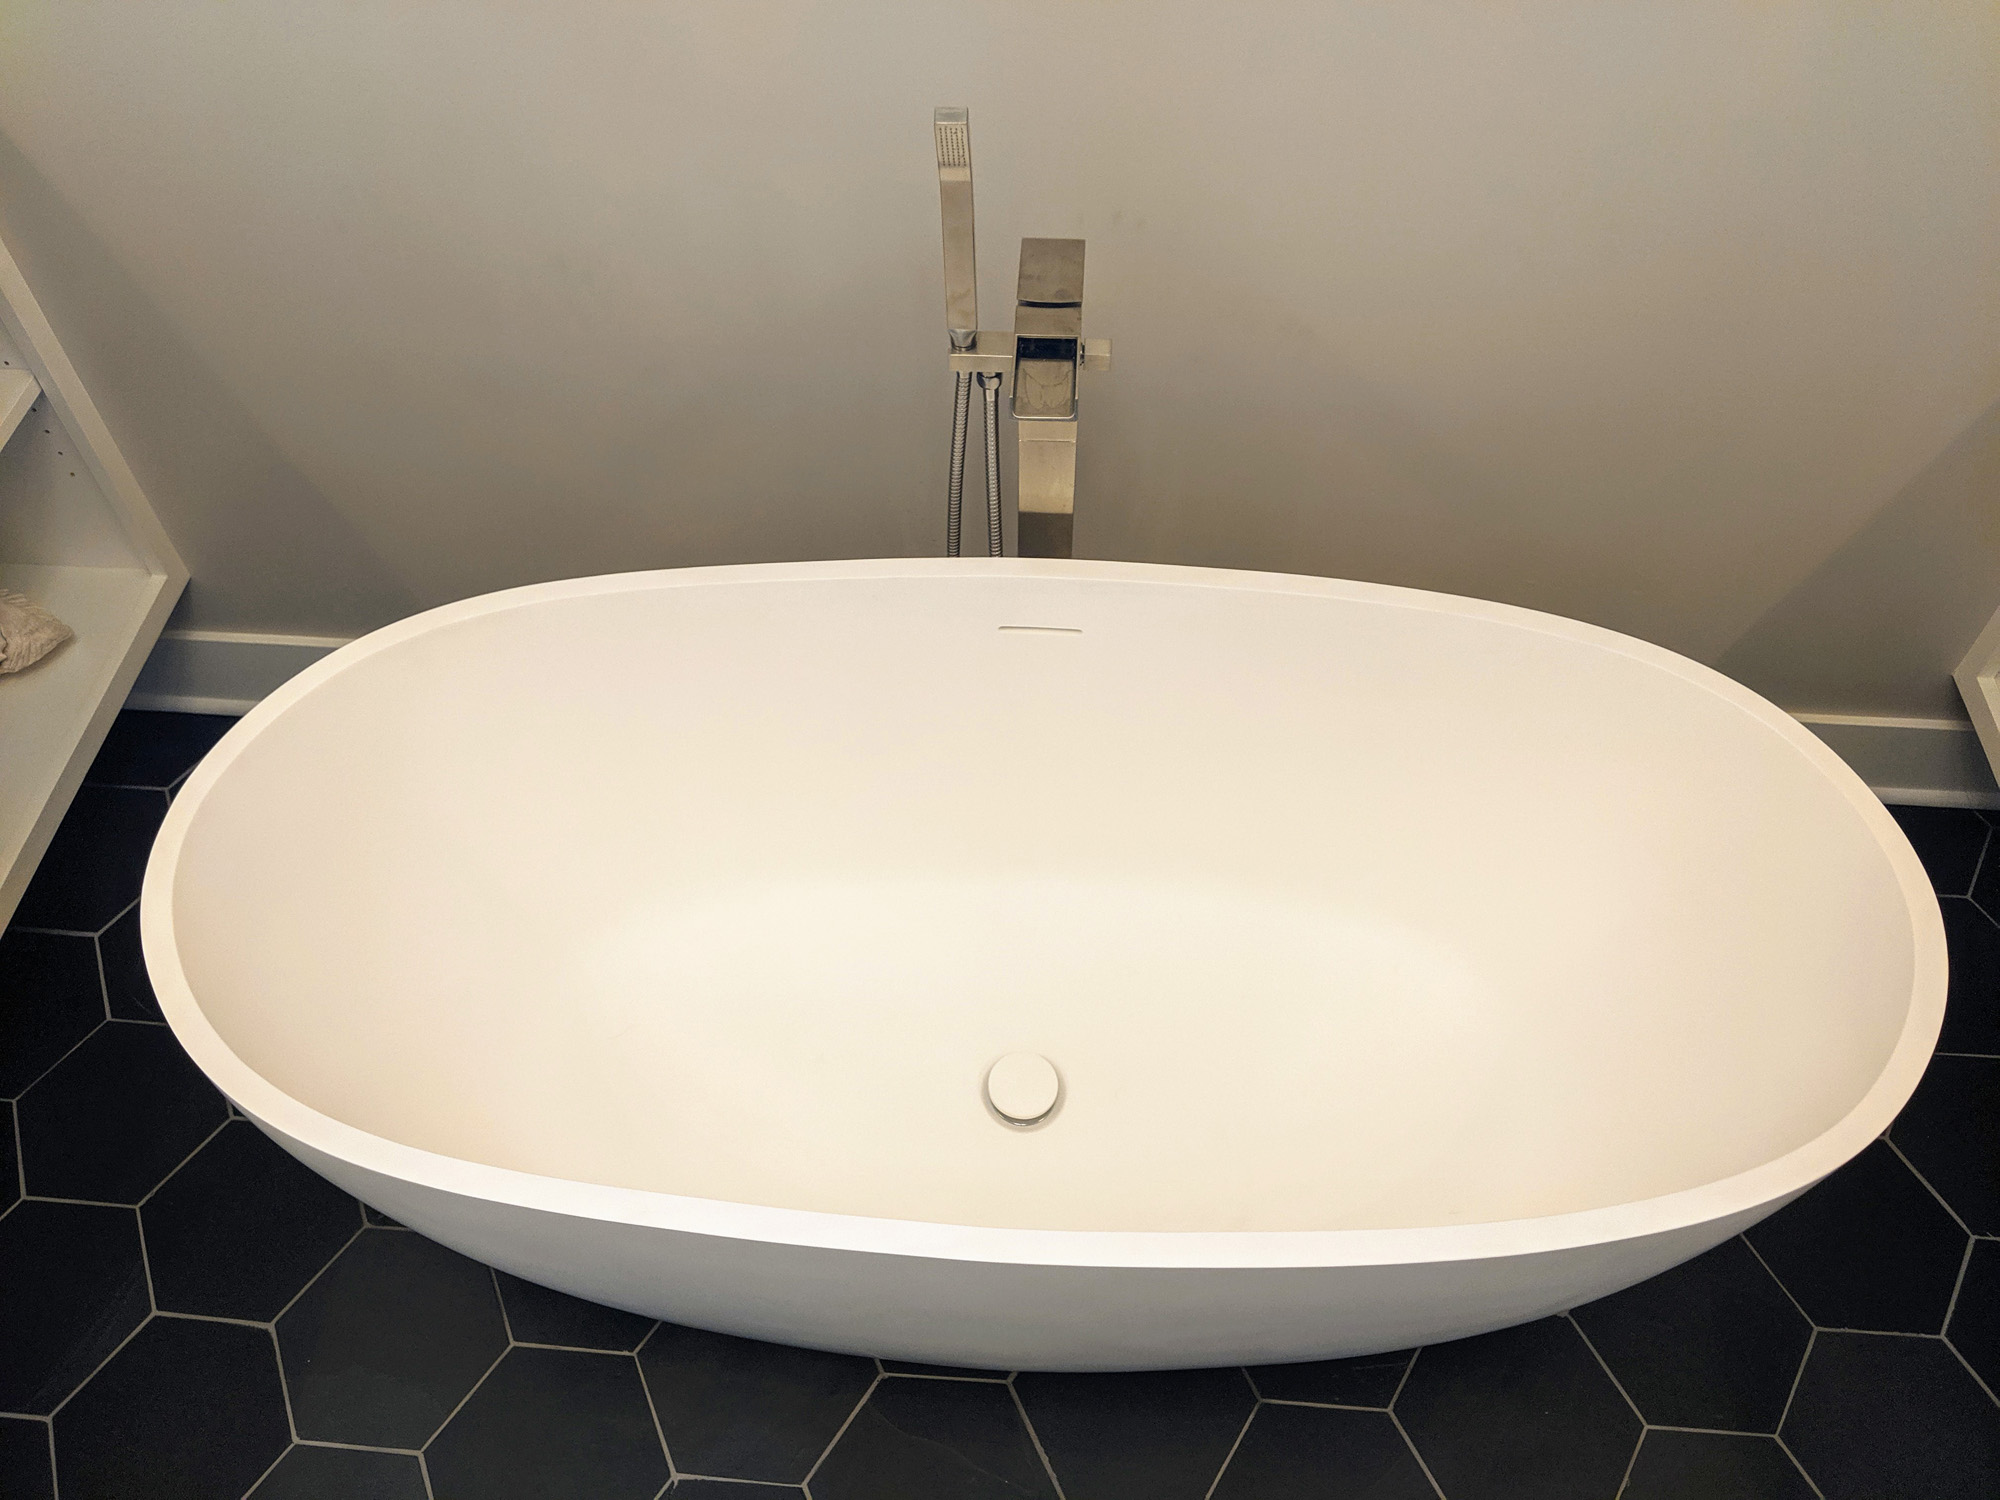 Floor mounted tub fixture